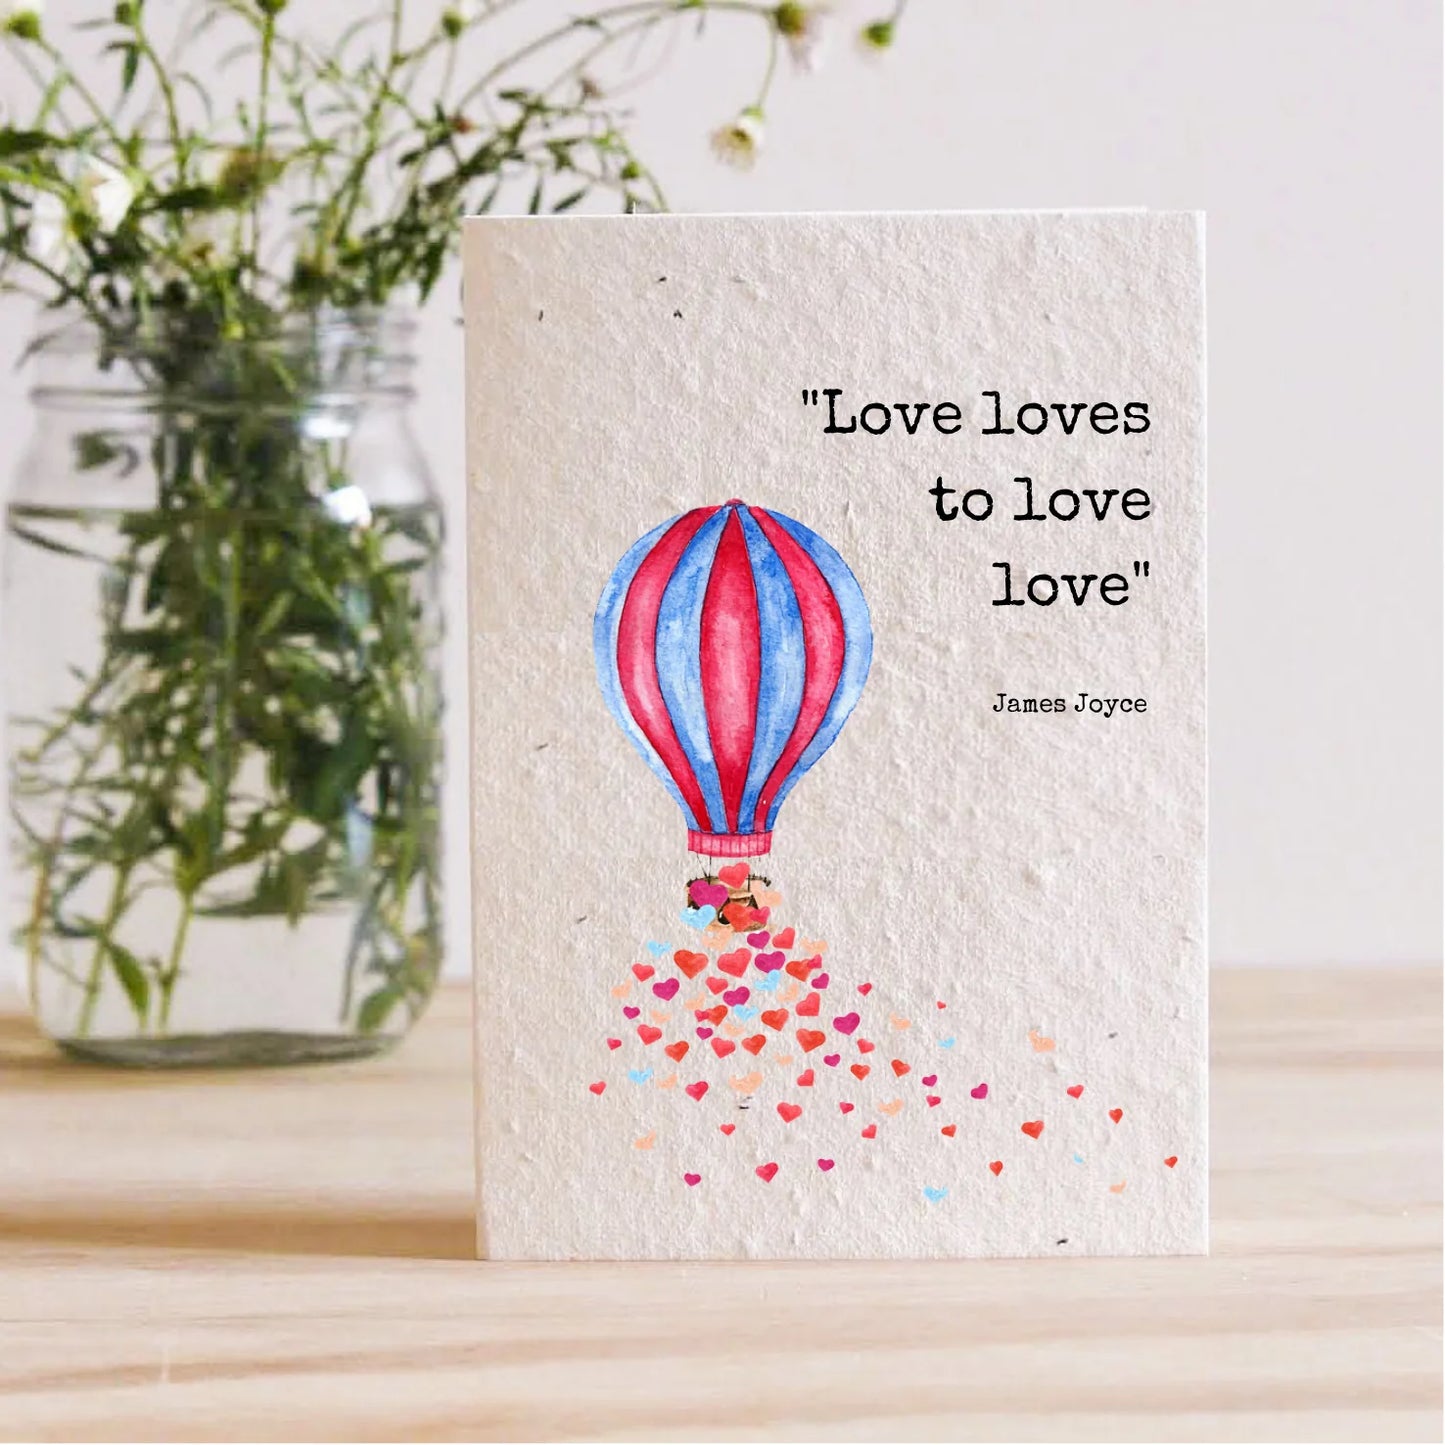 Love loves to Love Love (James Joyce 50006B